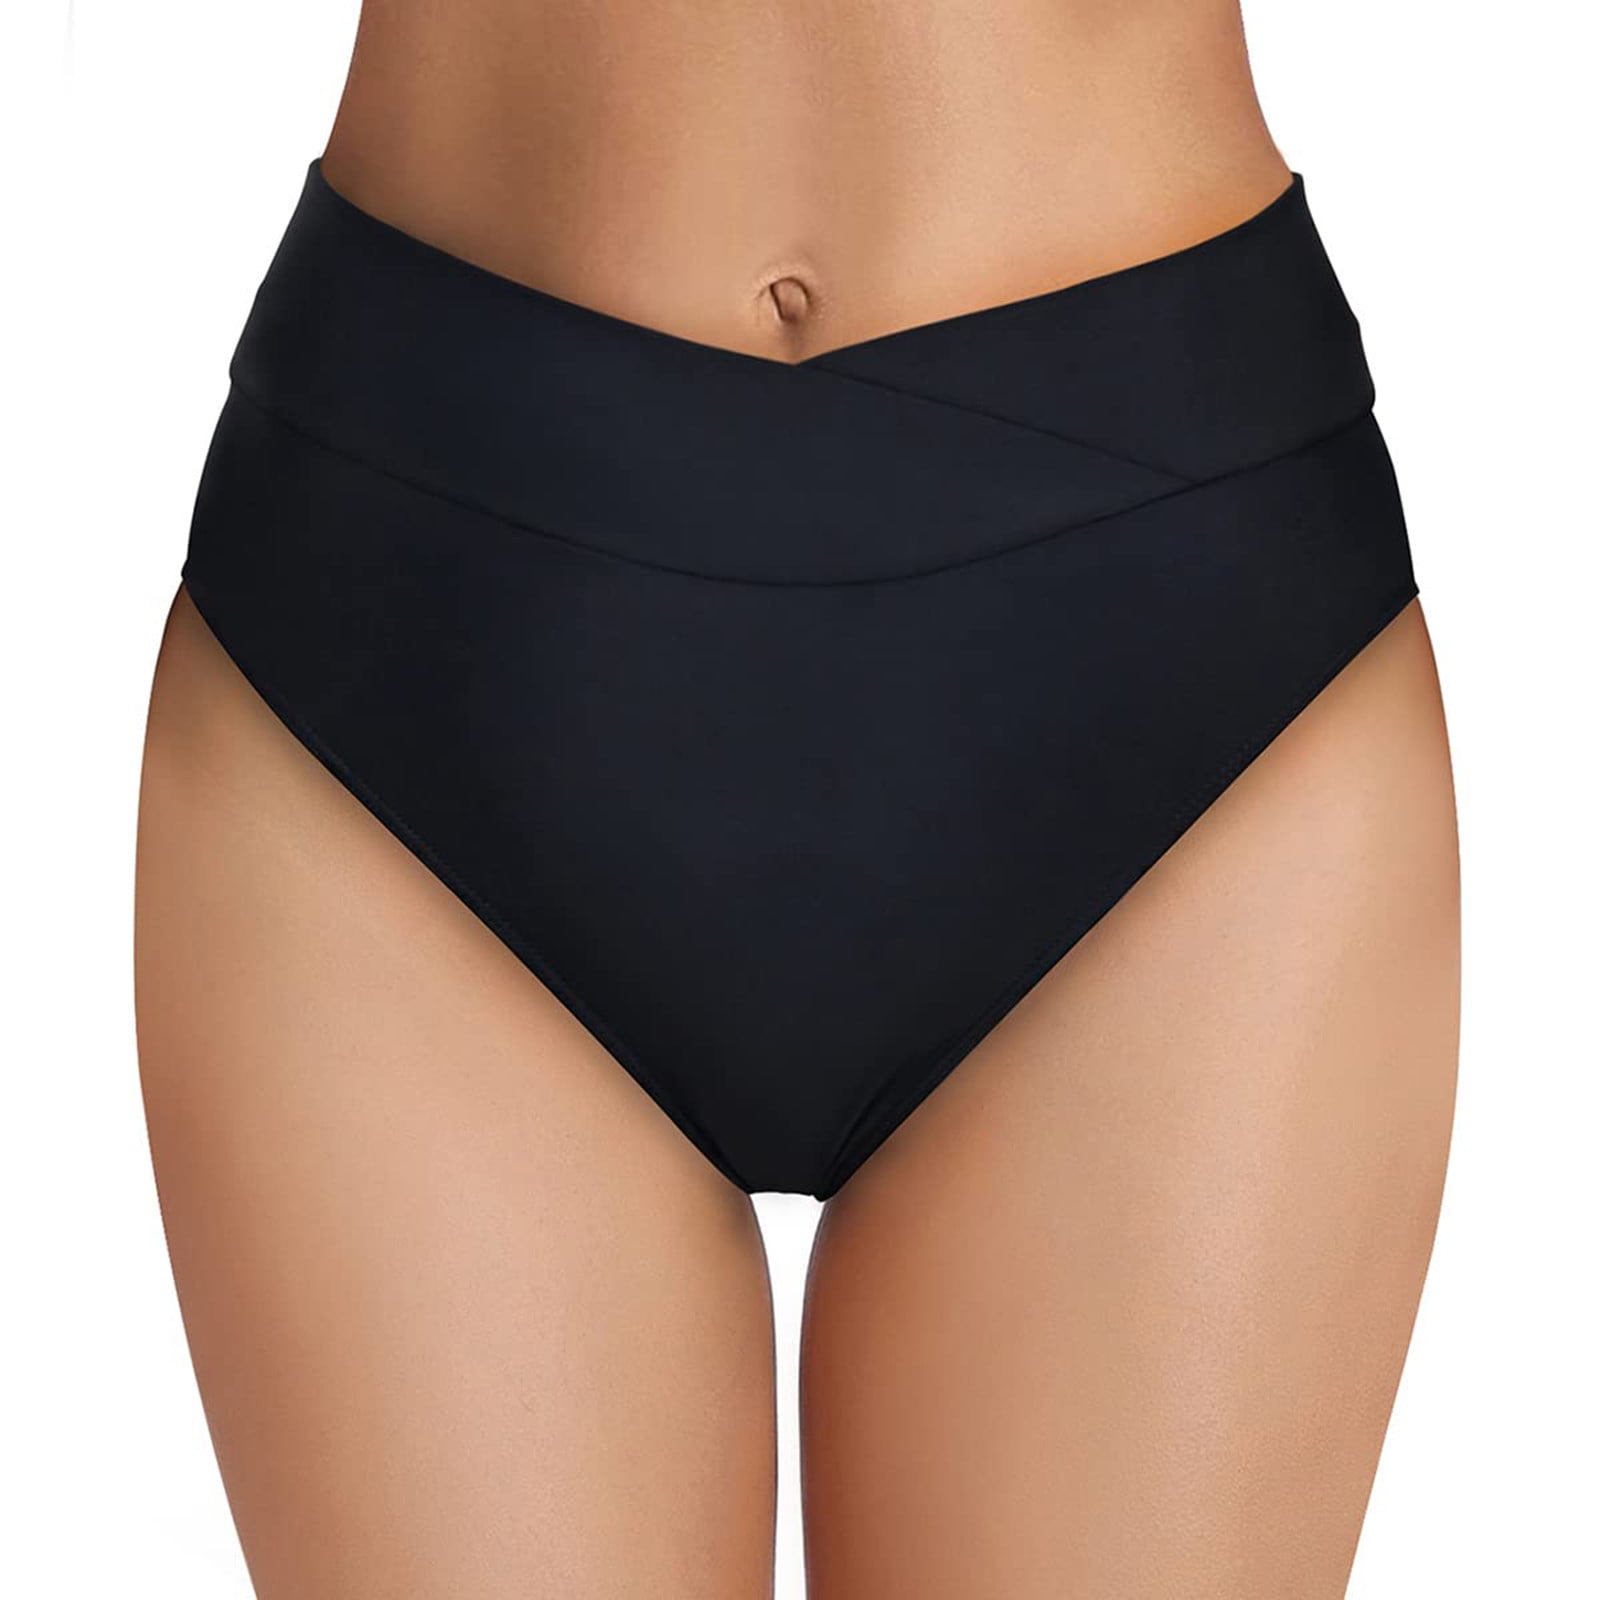 Aayomet Women High Waisted Bikini Bottoms High Cut Swim Bottom